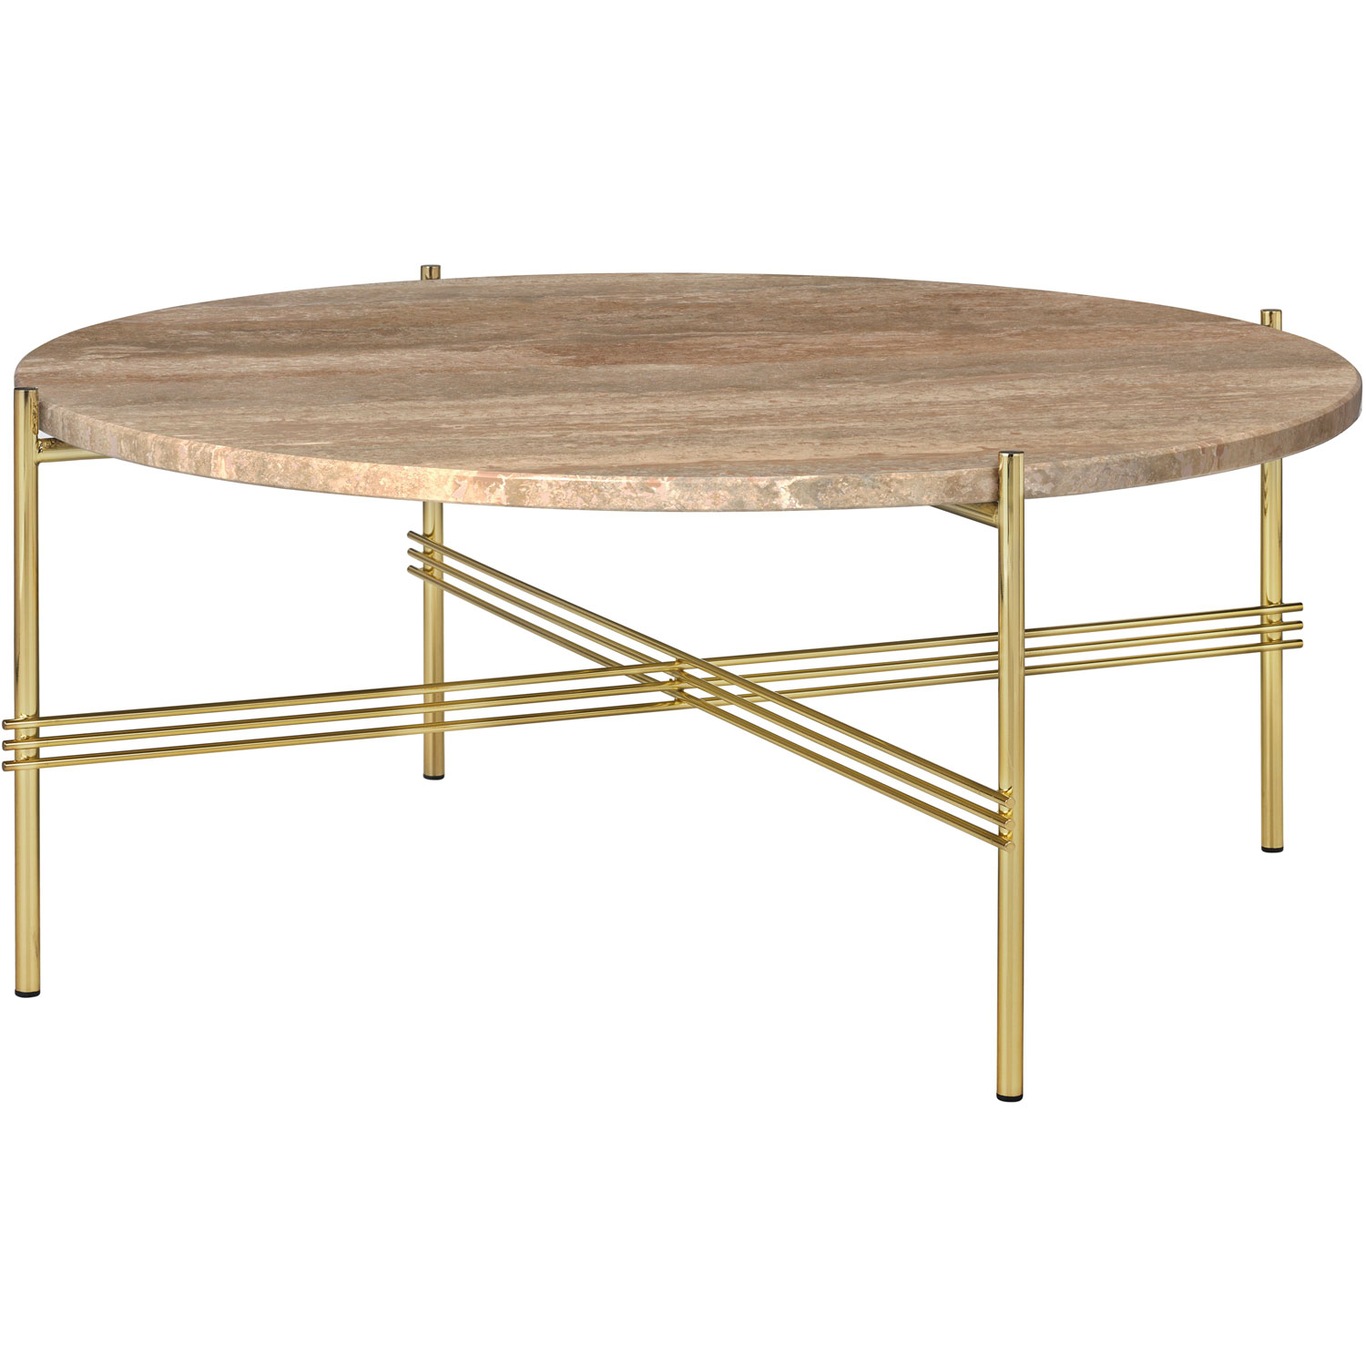 TS Coffee Table 80 cm, Brass / Warm taupe Travertine